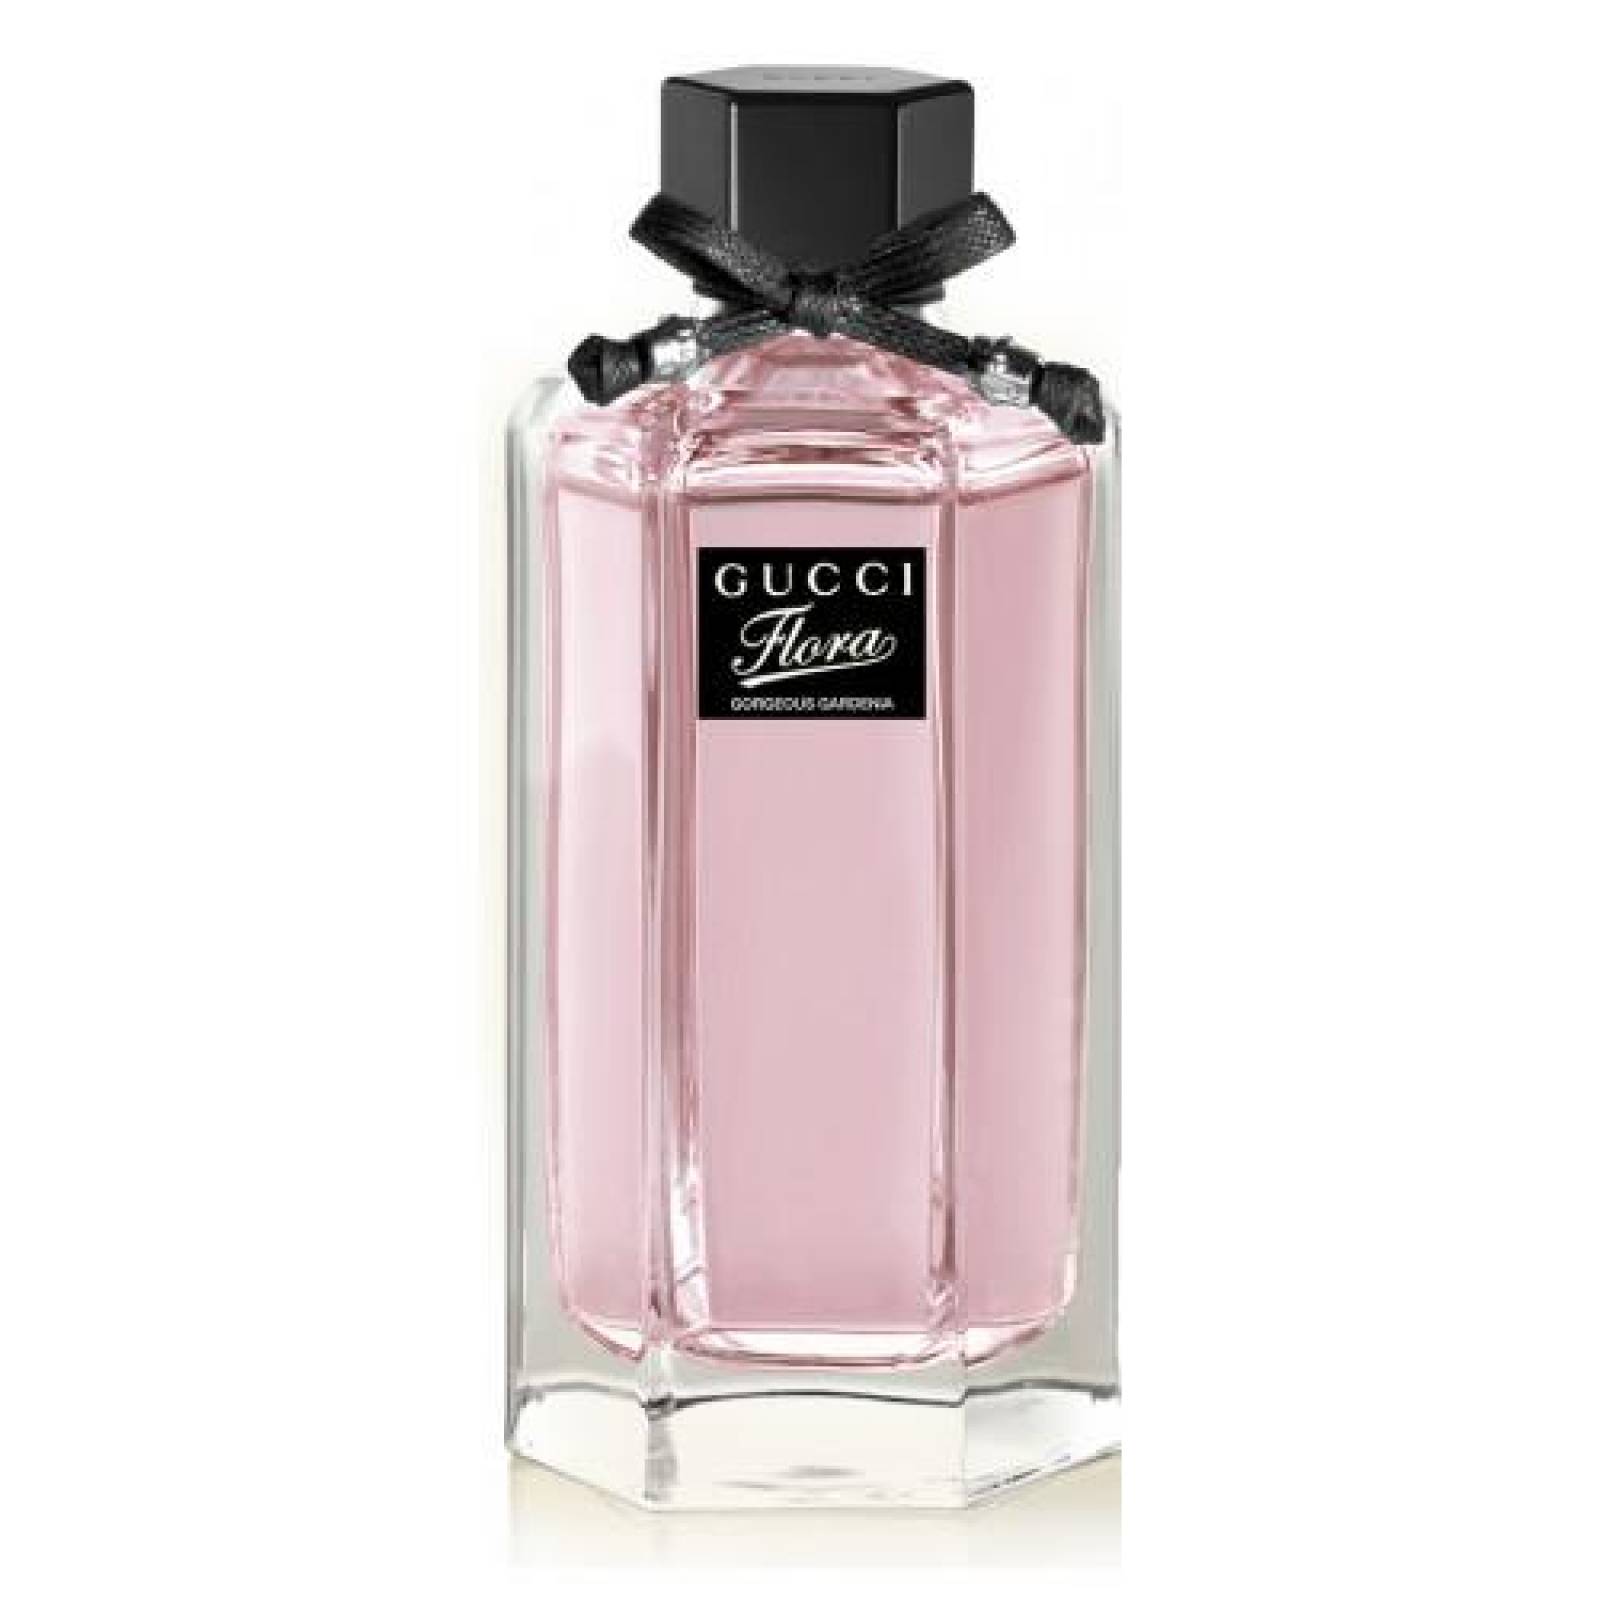 Flora Parfum de Gucci Dama de 100 ml